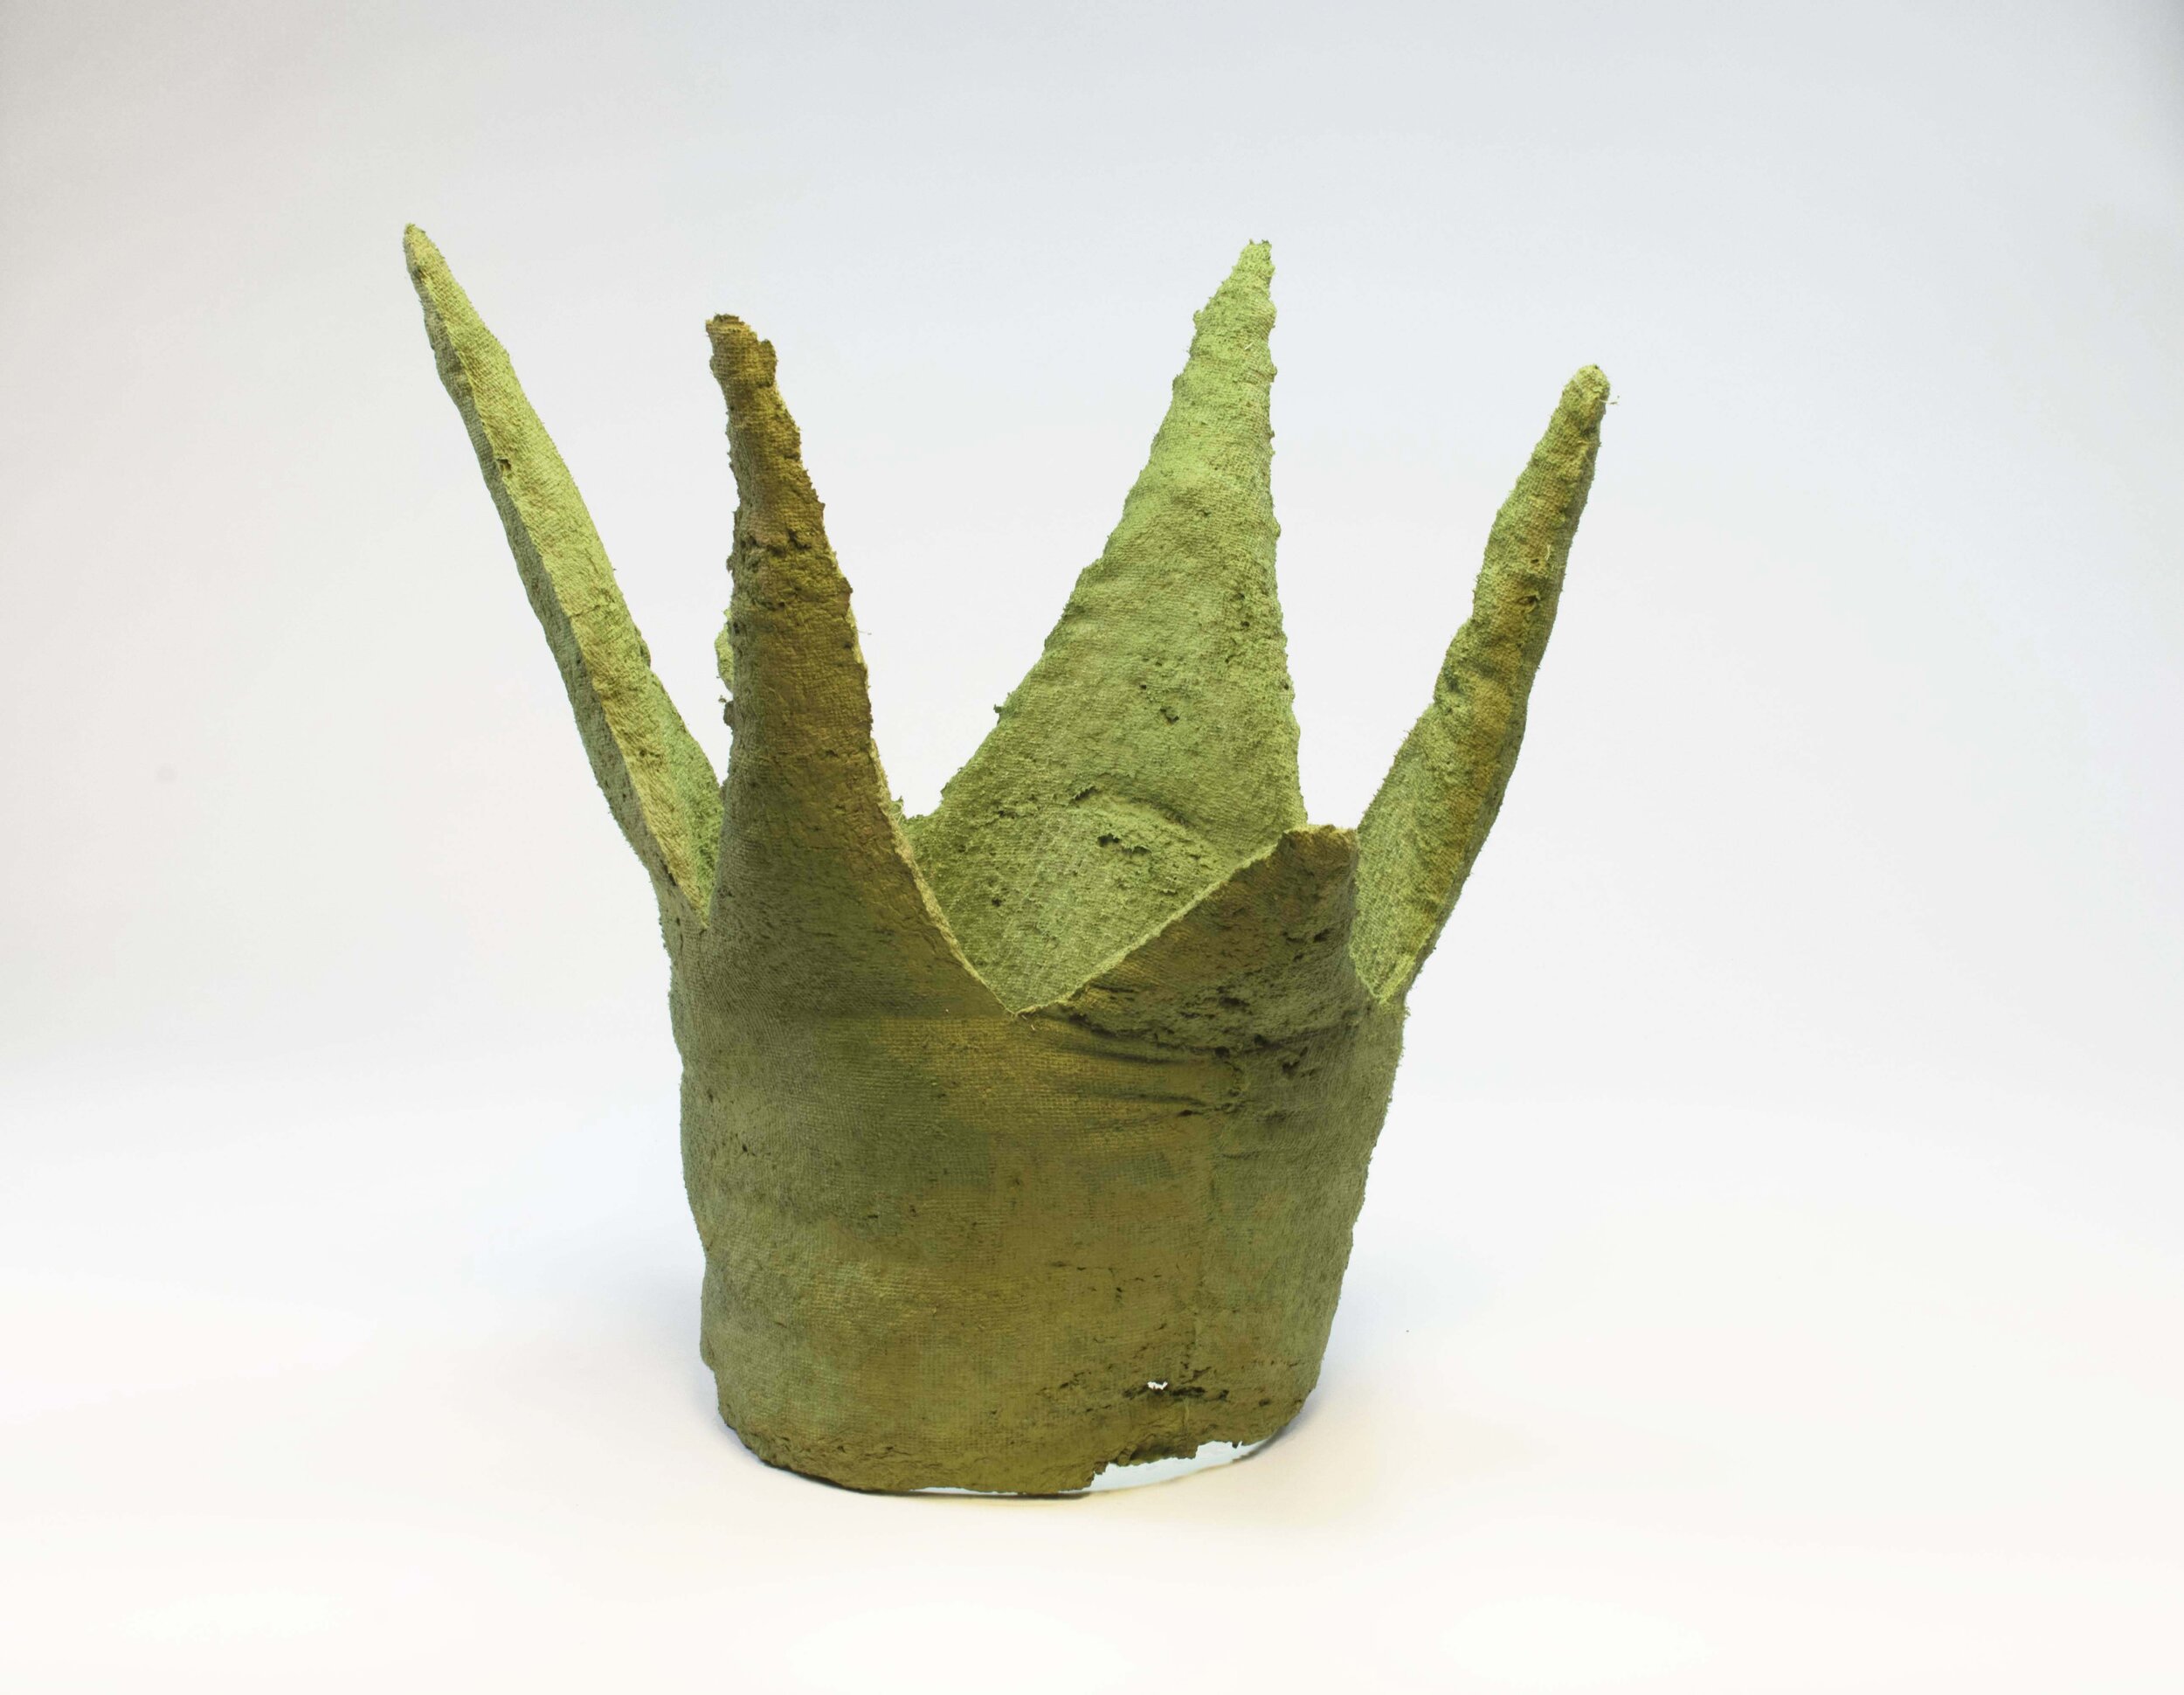   Crown , paper pulp, 20 x 20 x 20 in, 2019. 